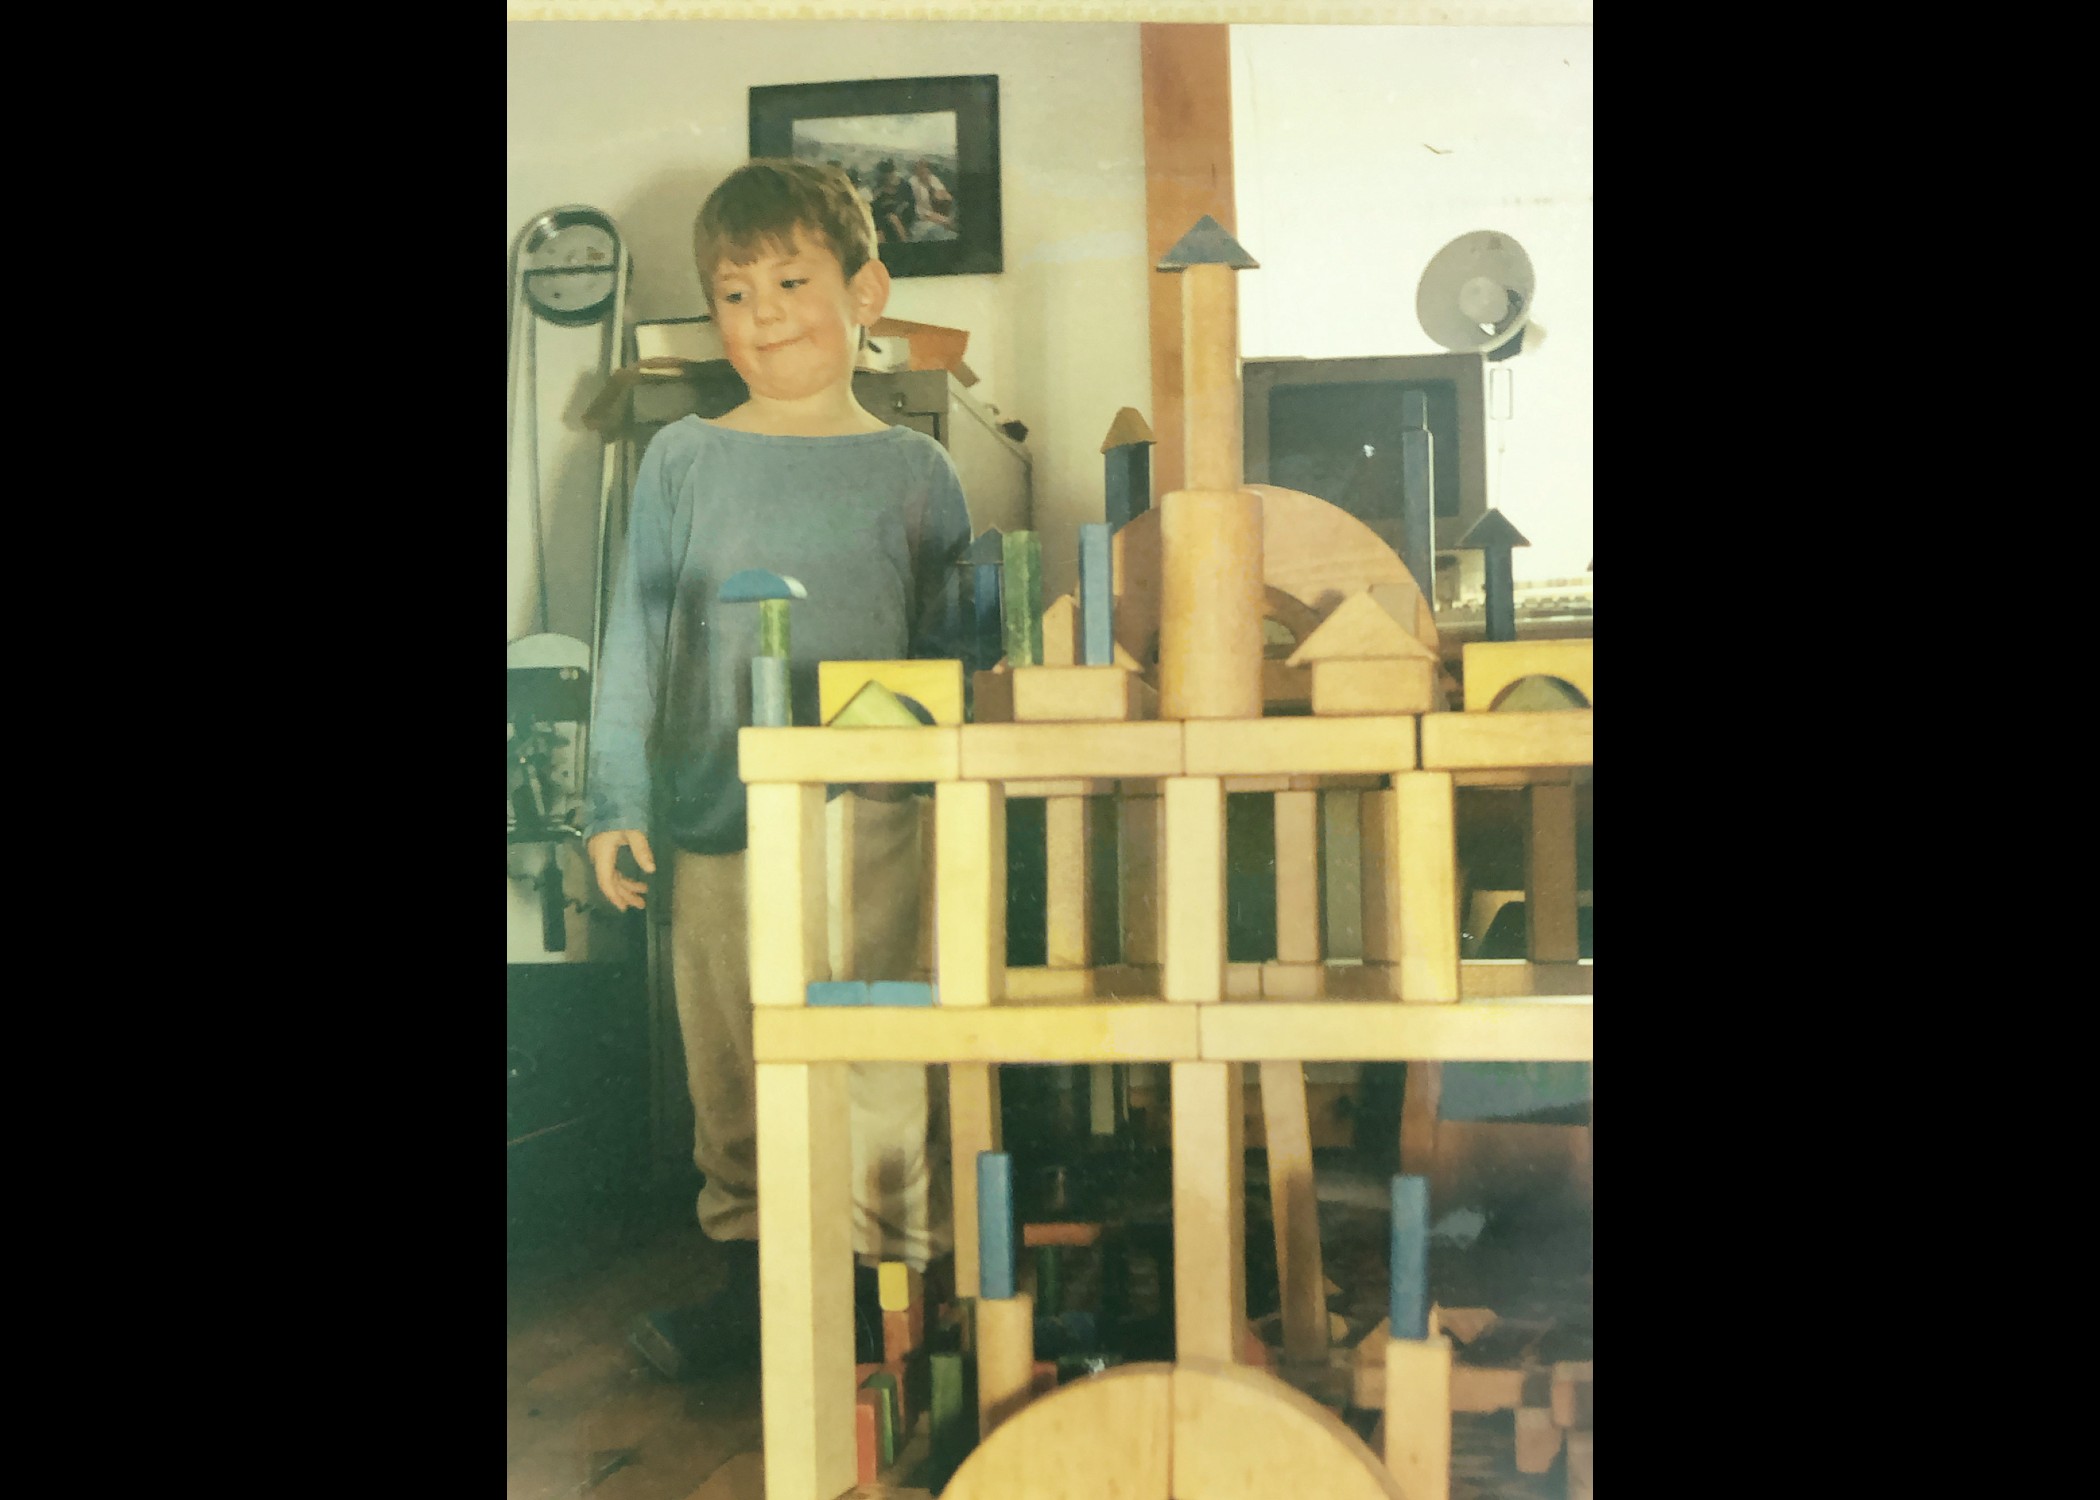 Reueben Fischer-Baum as a toddler stands next to one of his wooden block building creations